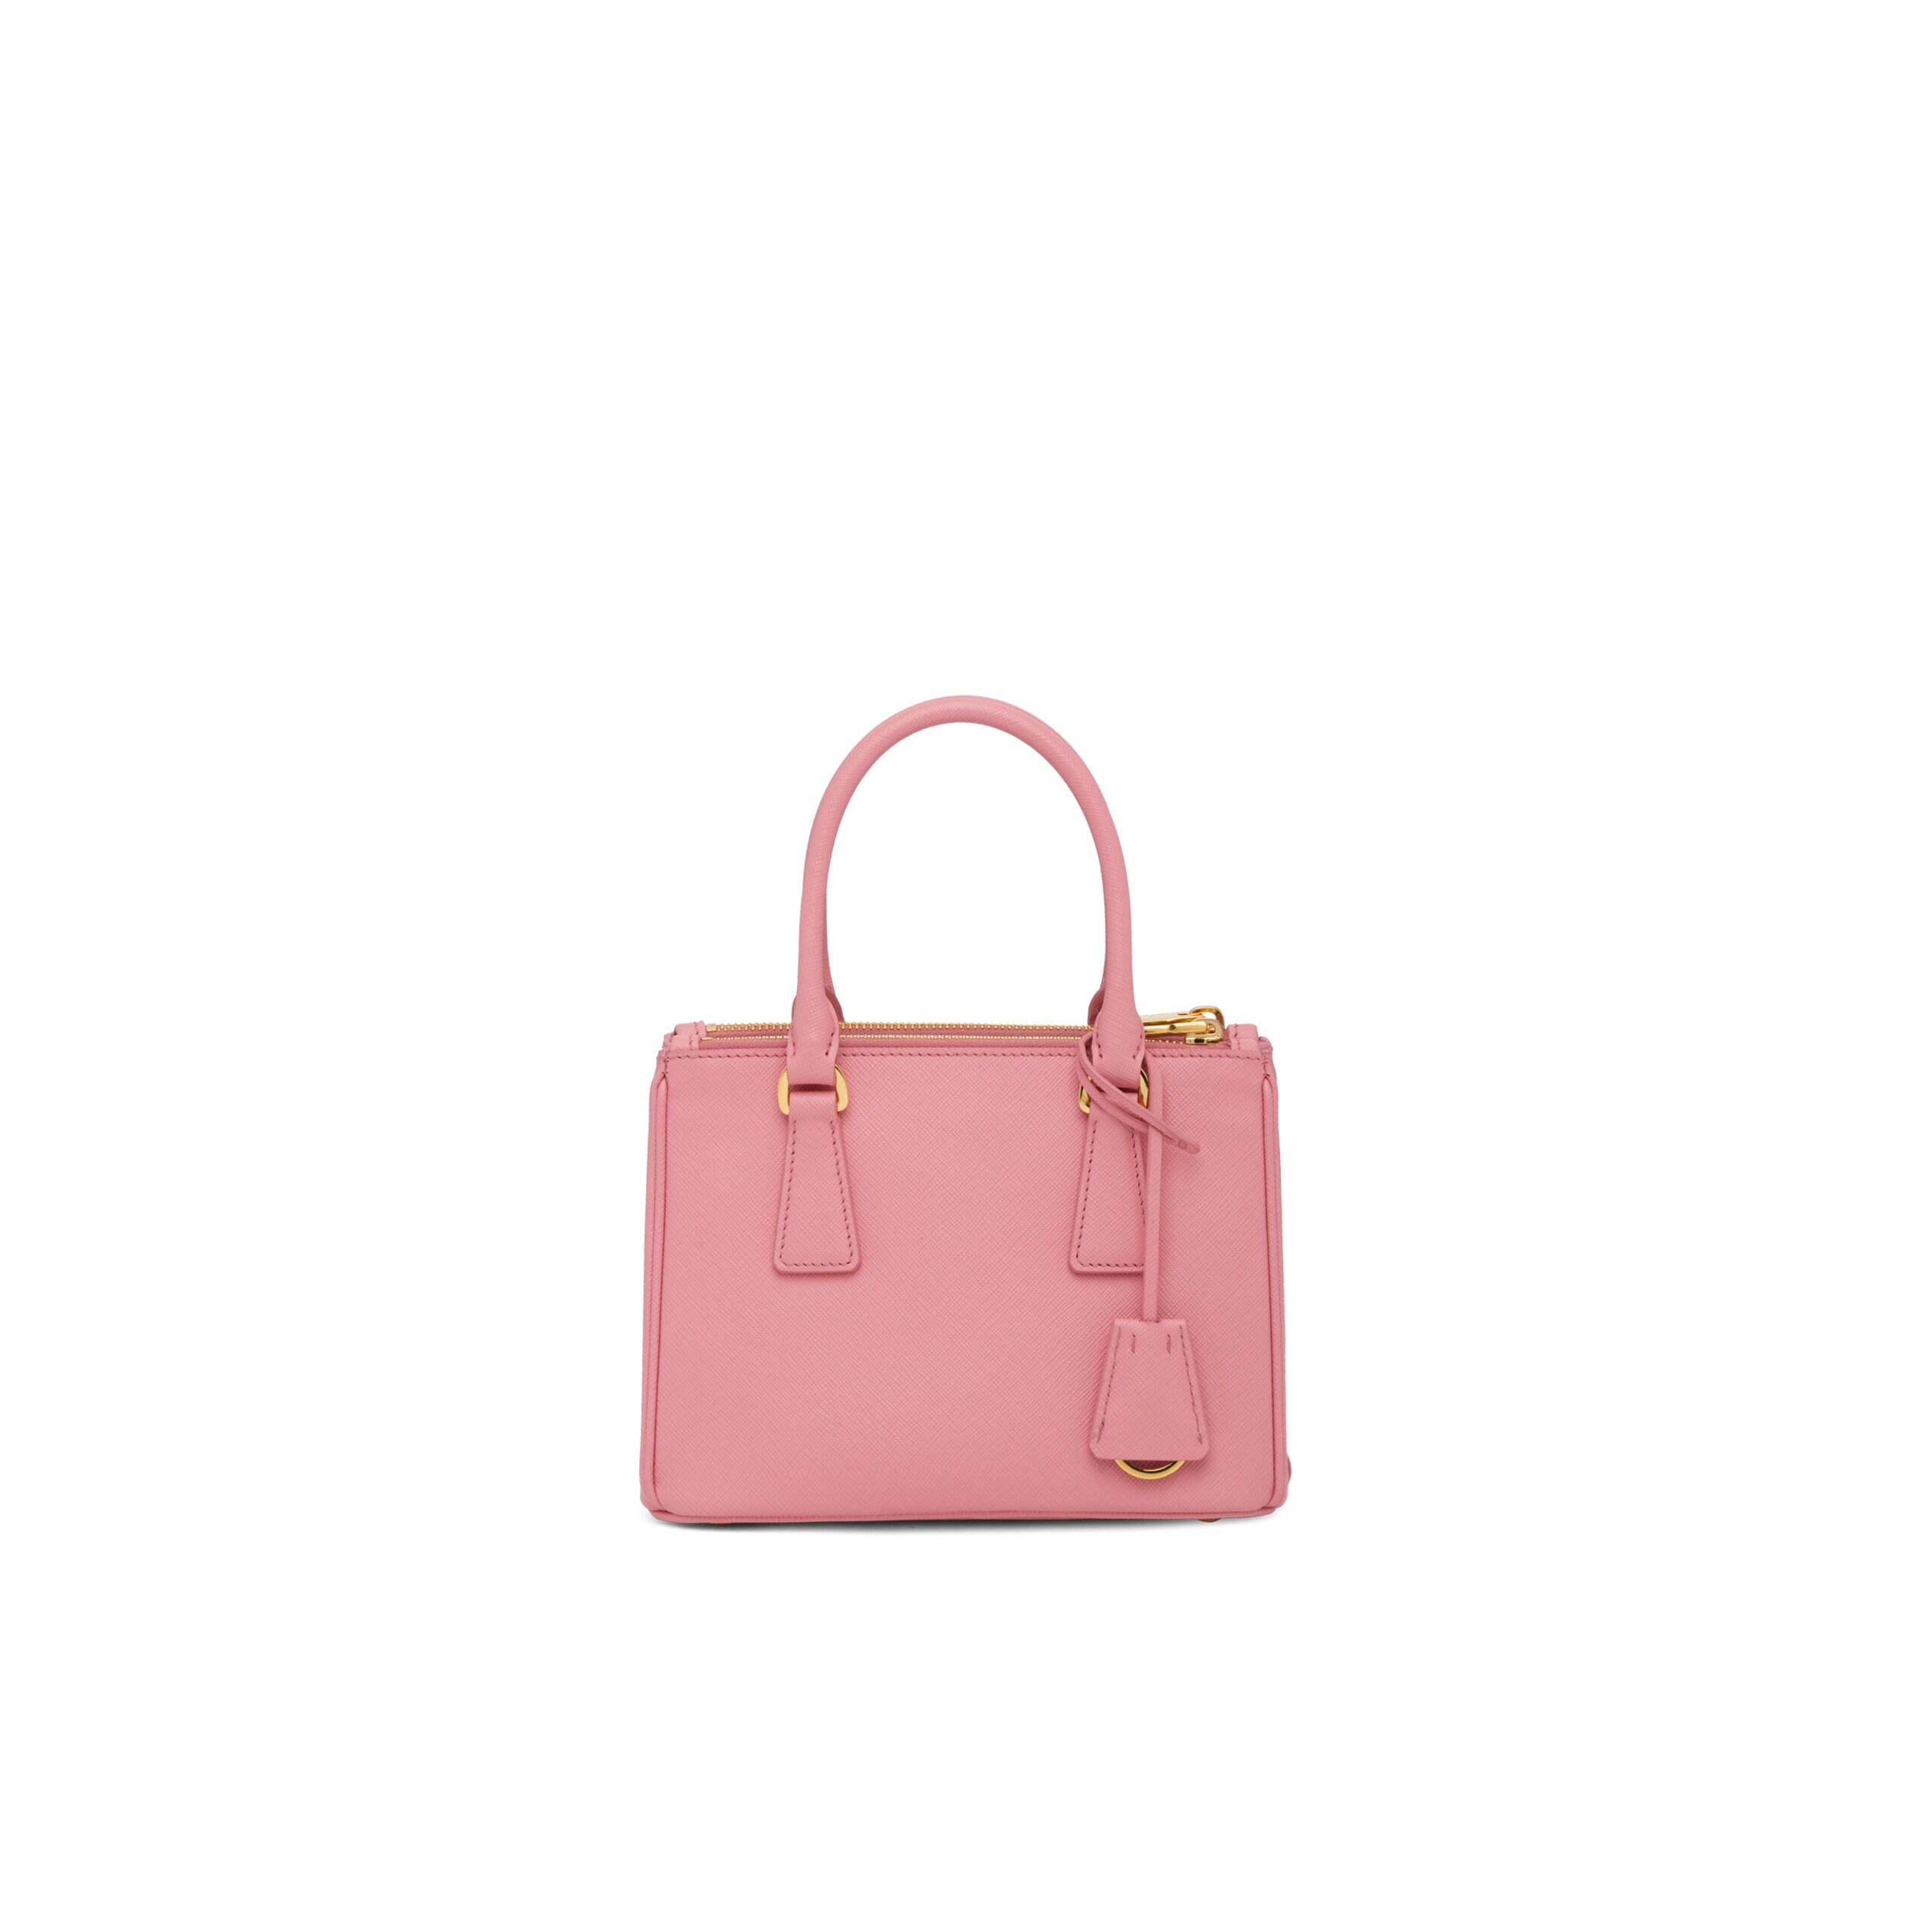 Prada Galleria Saffiano Leather Micro-bag in Pink - Lyst